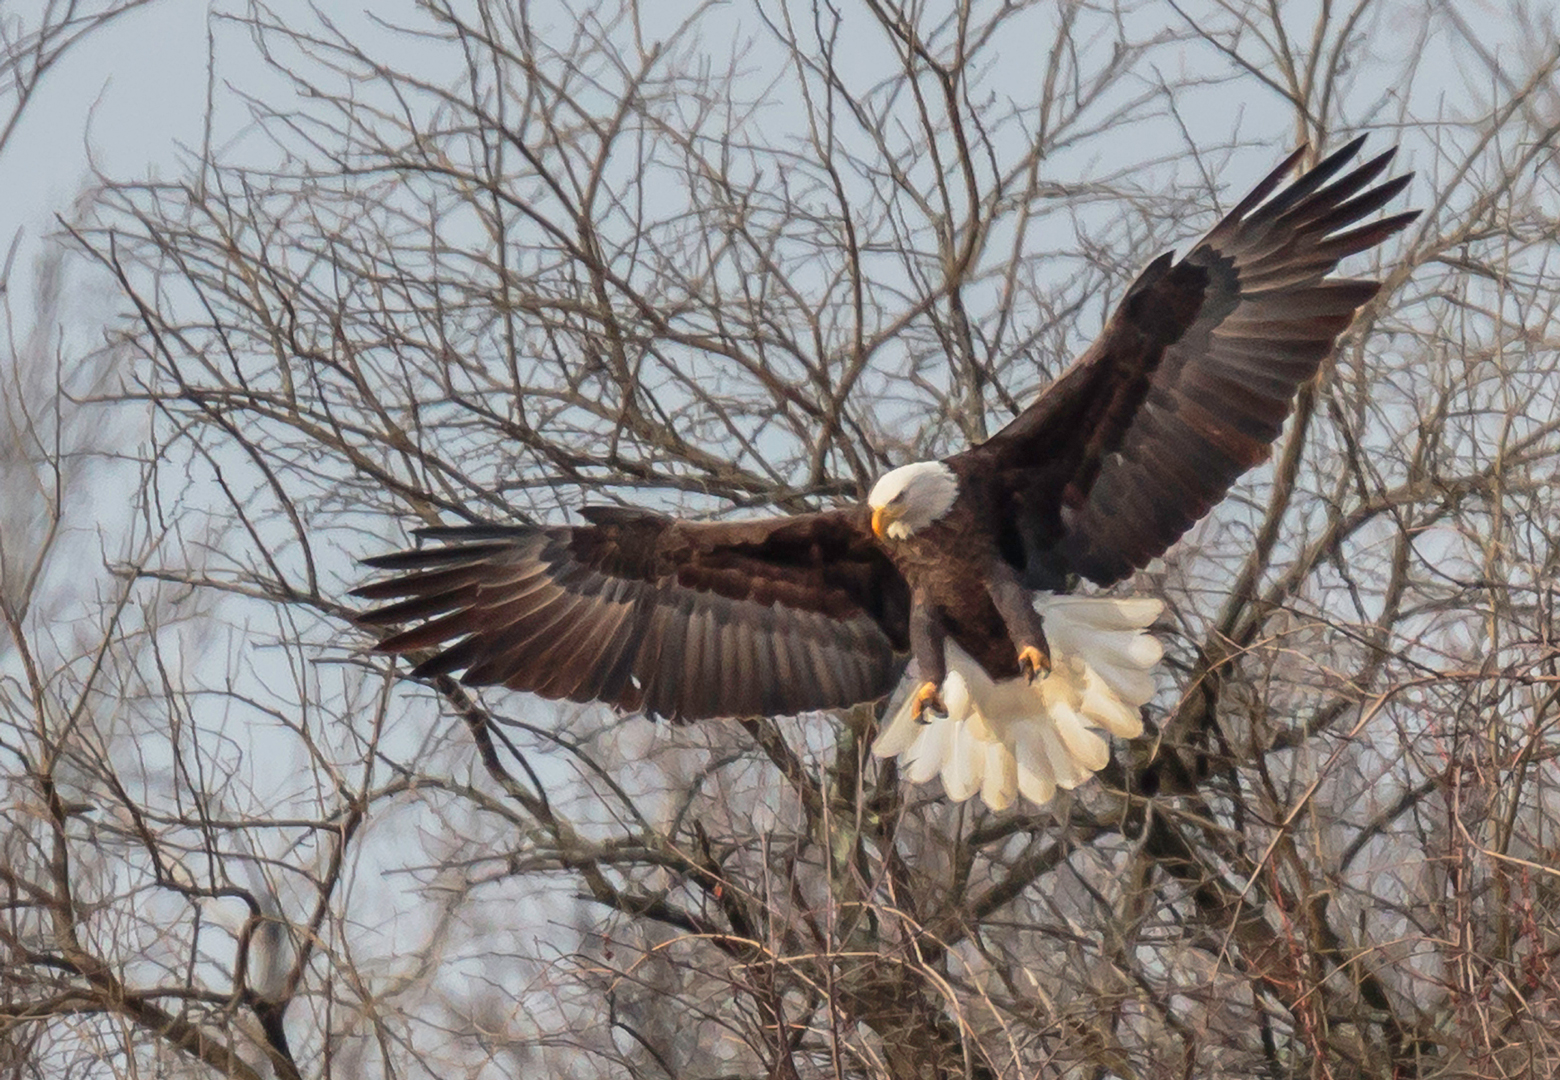 Eagle in flight at Pickerington Ponds Metro Park